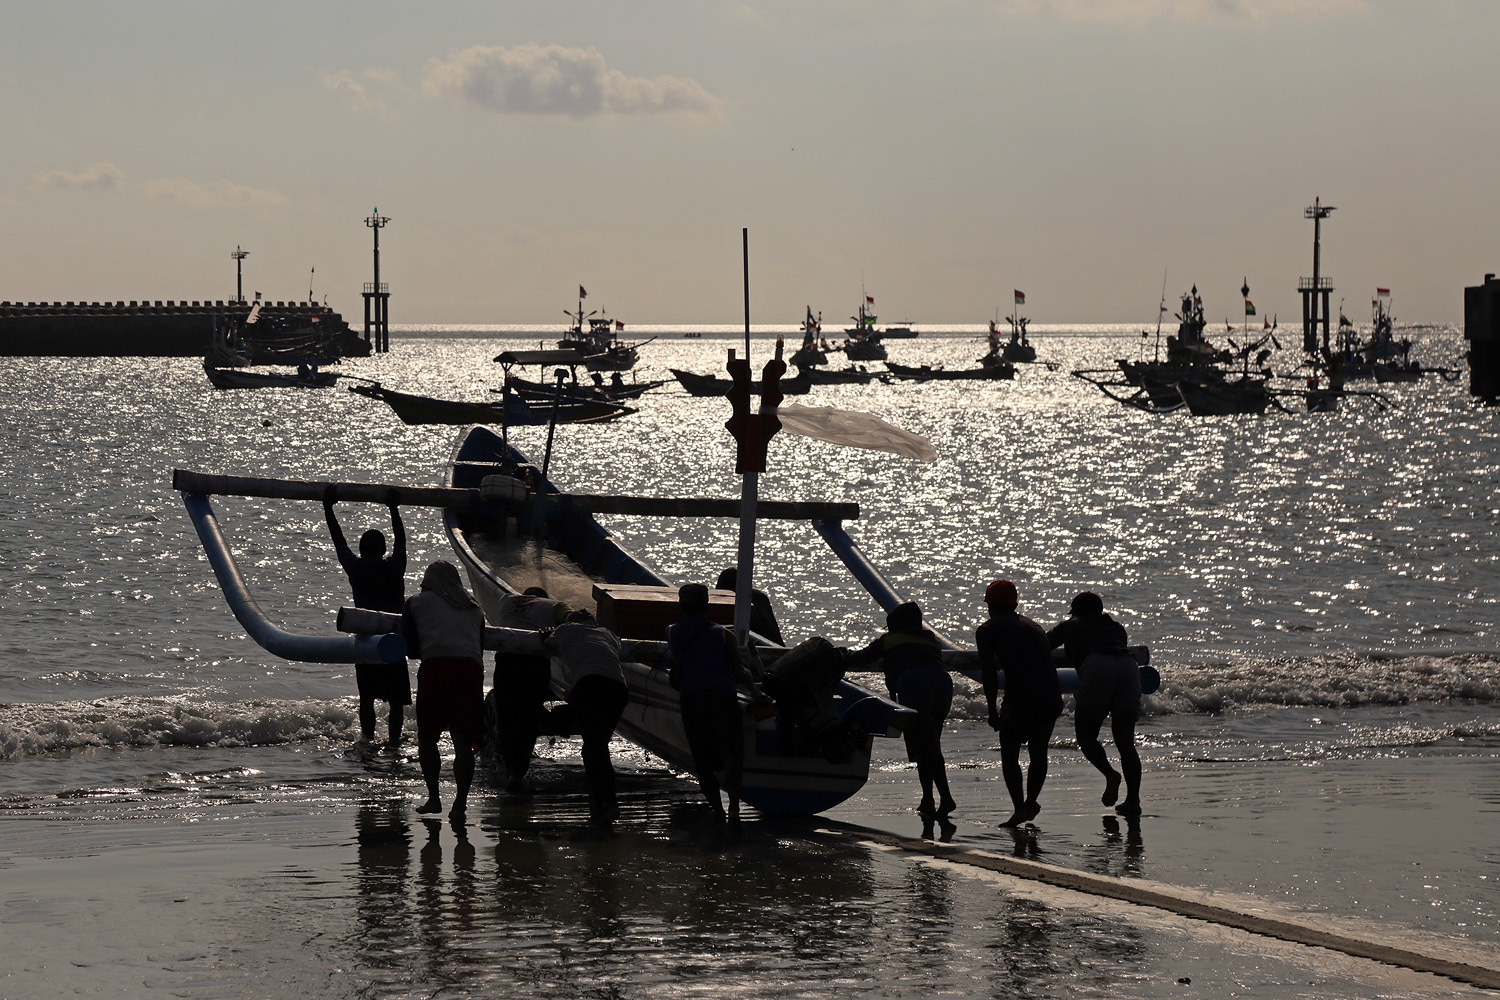 bill-hocker-boat-launch-kedonganan-beach-jimbaran-bali-indonesia-2016